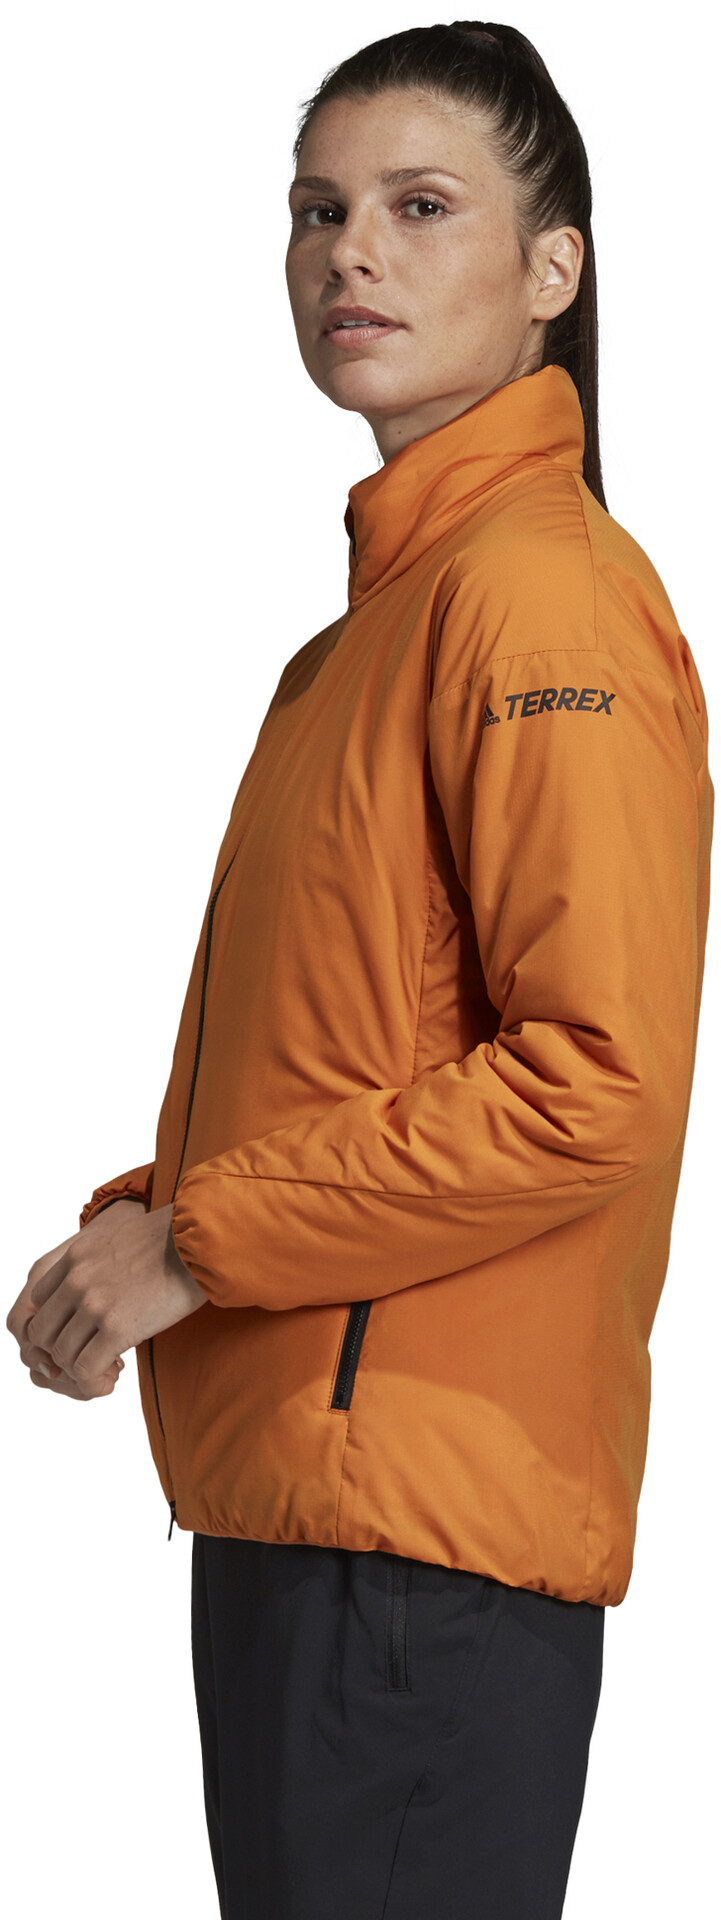 adidas terrex copper inmotion jacket